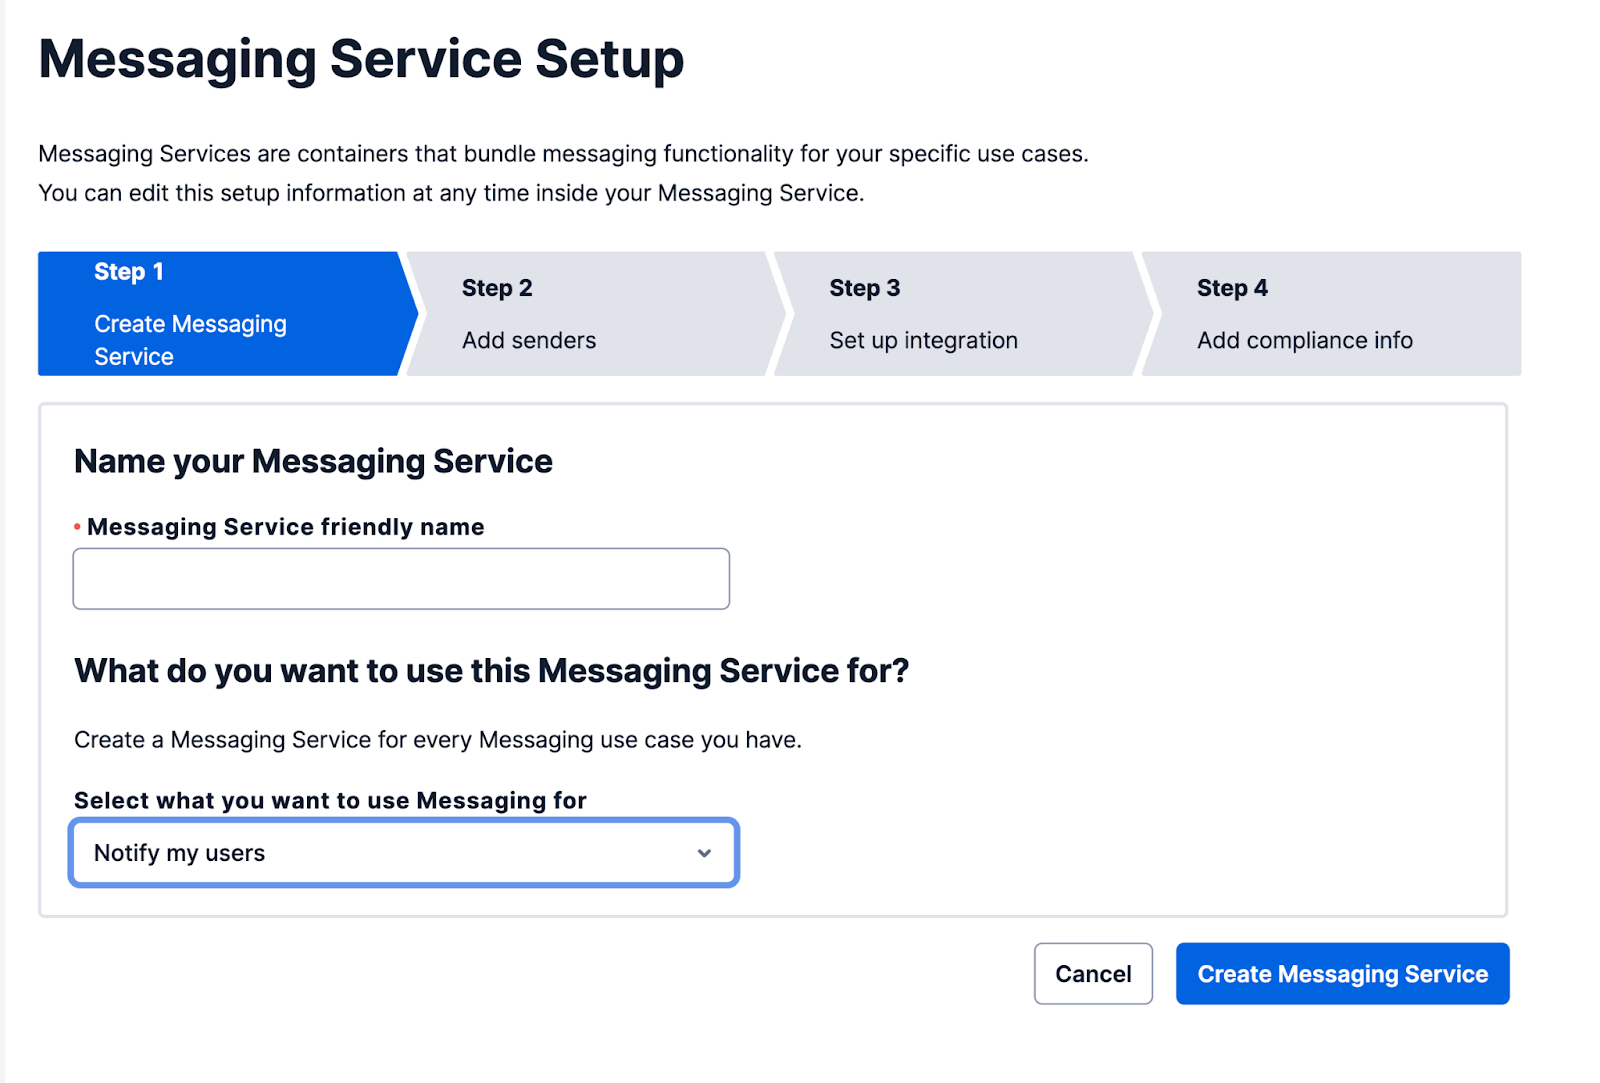 Step 1. Create Messaging Service